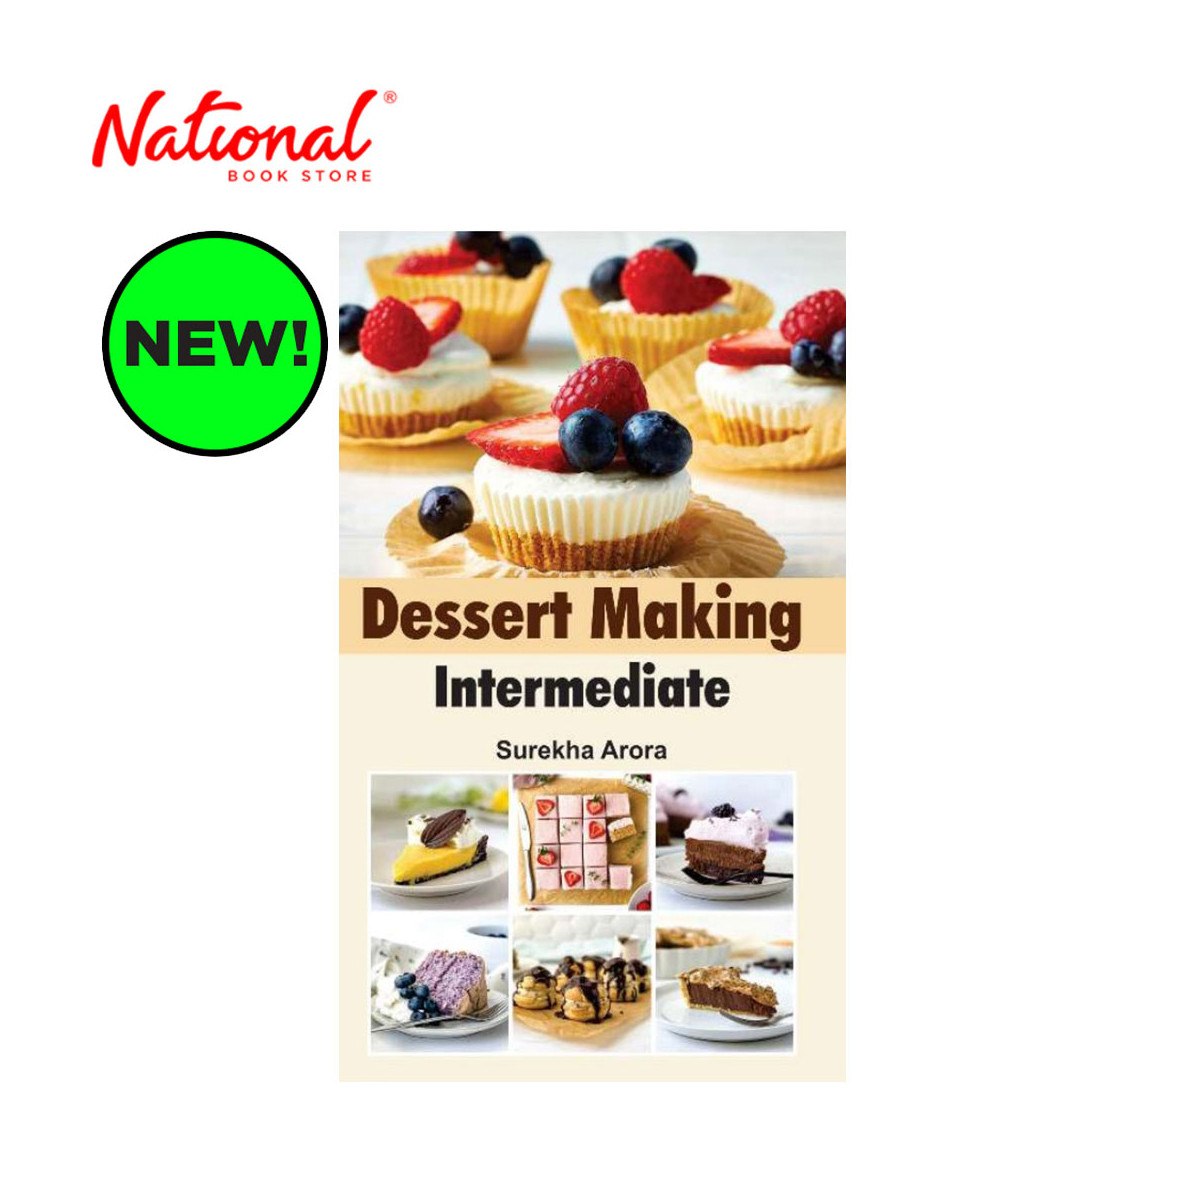 Dessert Making: Intermediate by Surekha Arora - Trade Paperback - Culinary Books